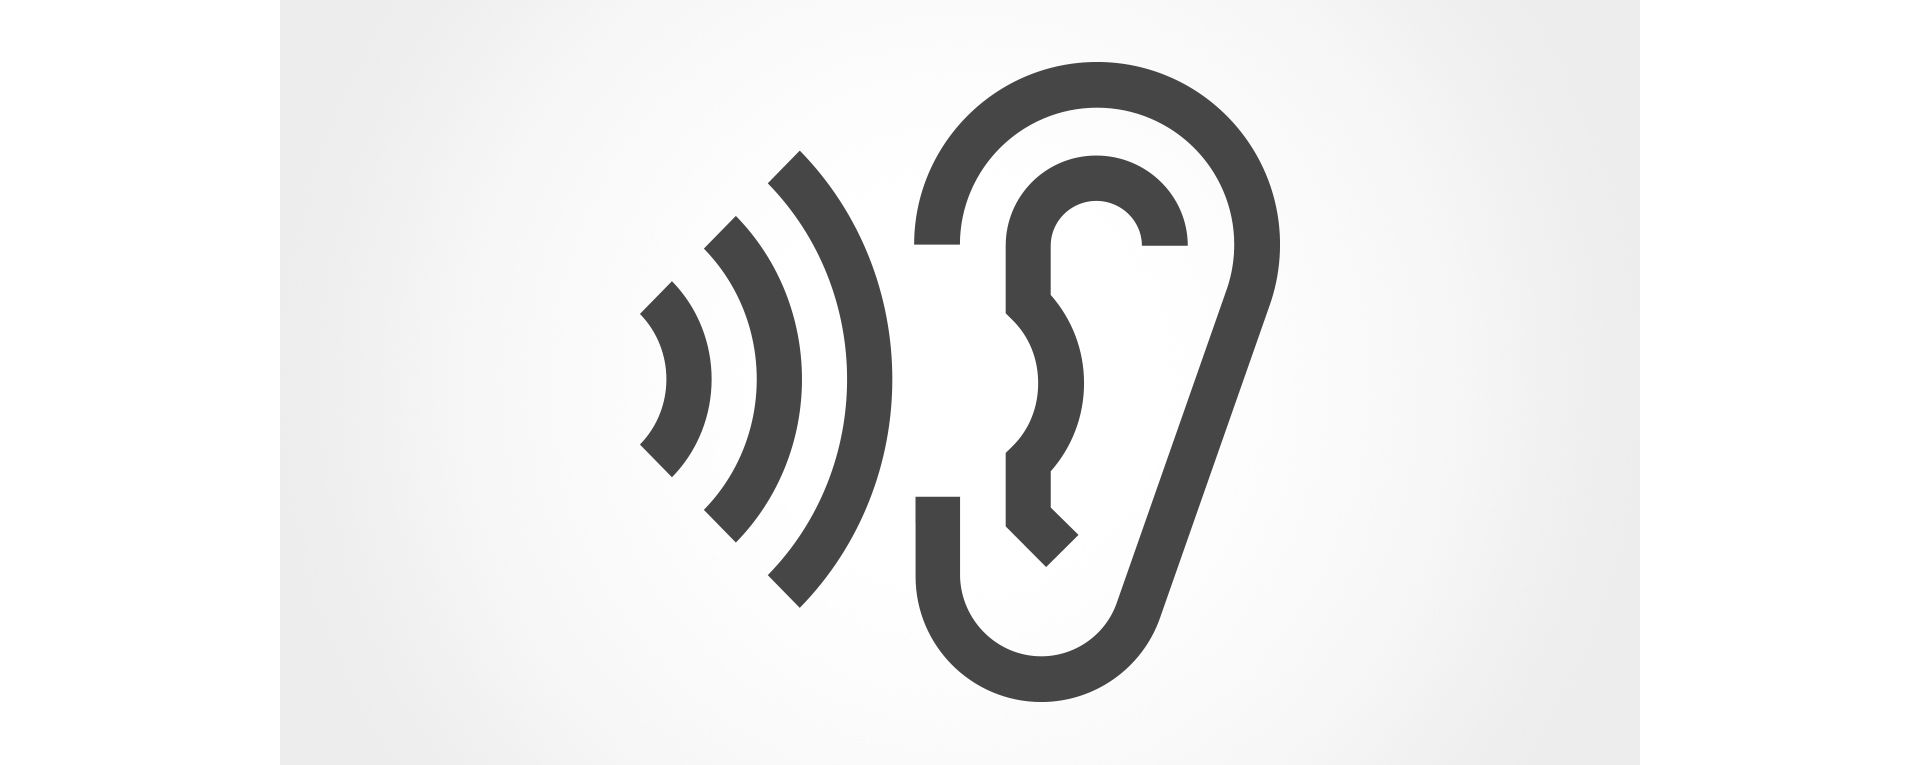 Ear depicting quieter sound levels